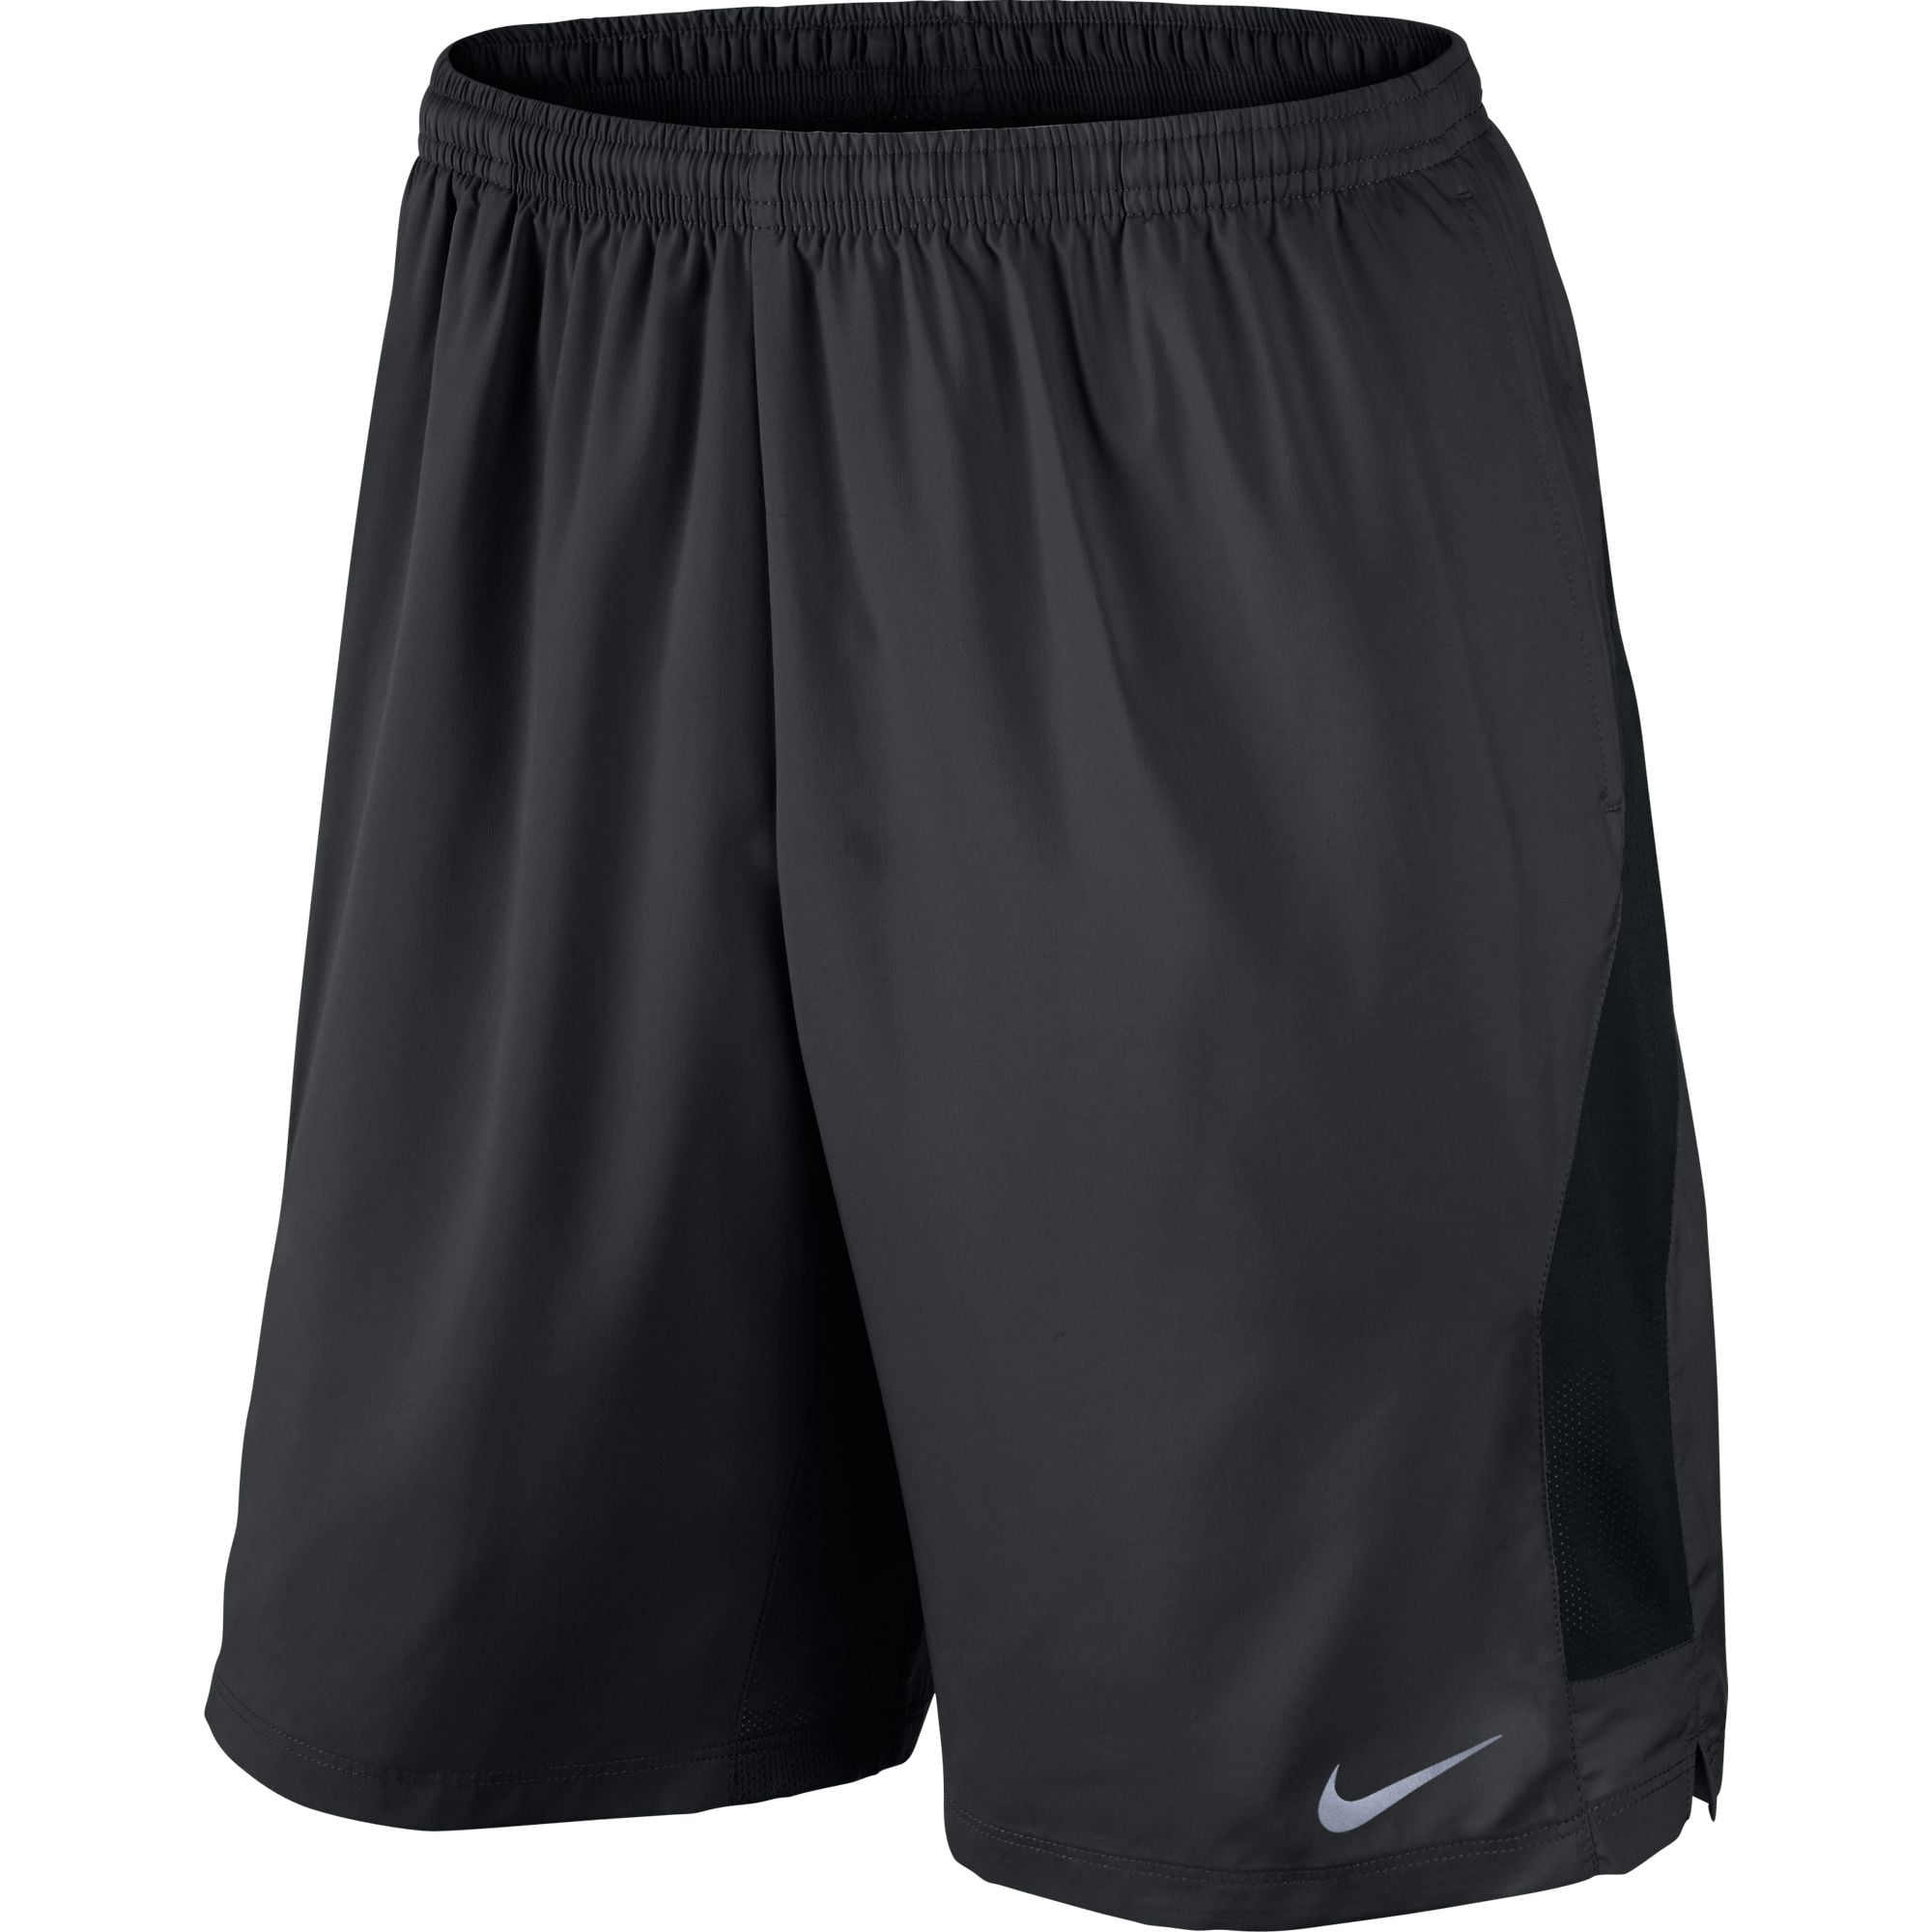 Nike - Nike 9 Inch Freedom Training Men's Shorts Running Athletic ...